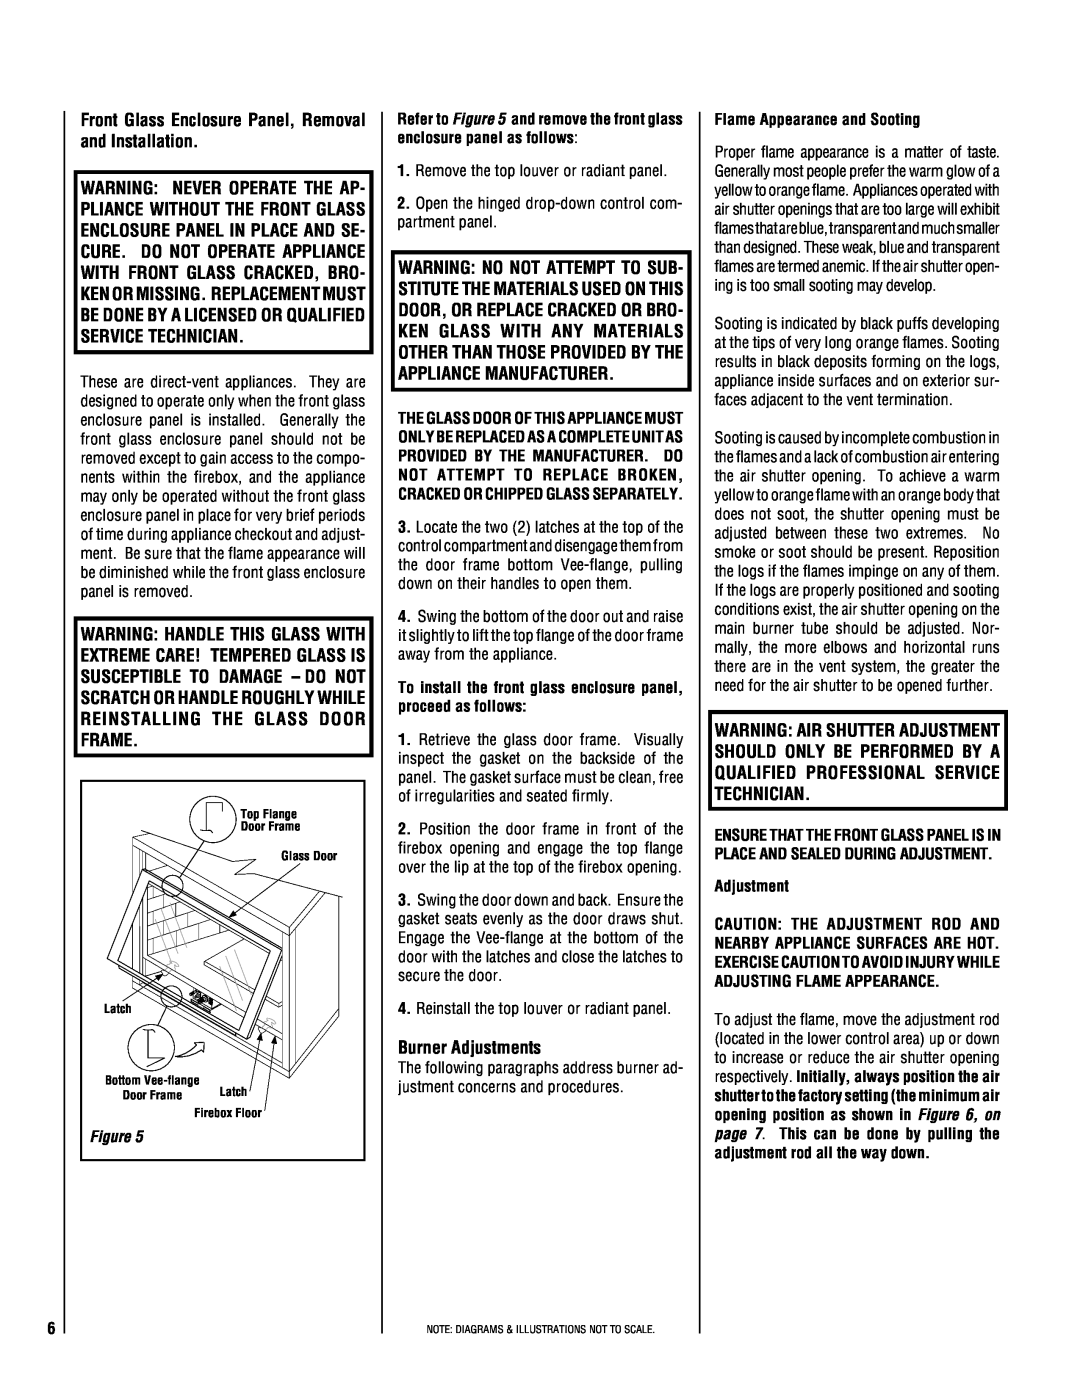 Superior NMC004-TD, NEC004-TD manual Burner Adjustments 